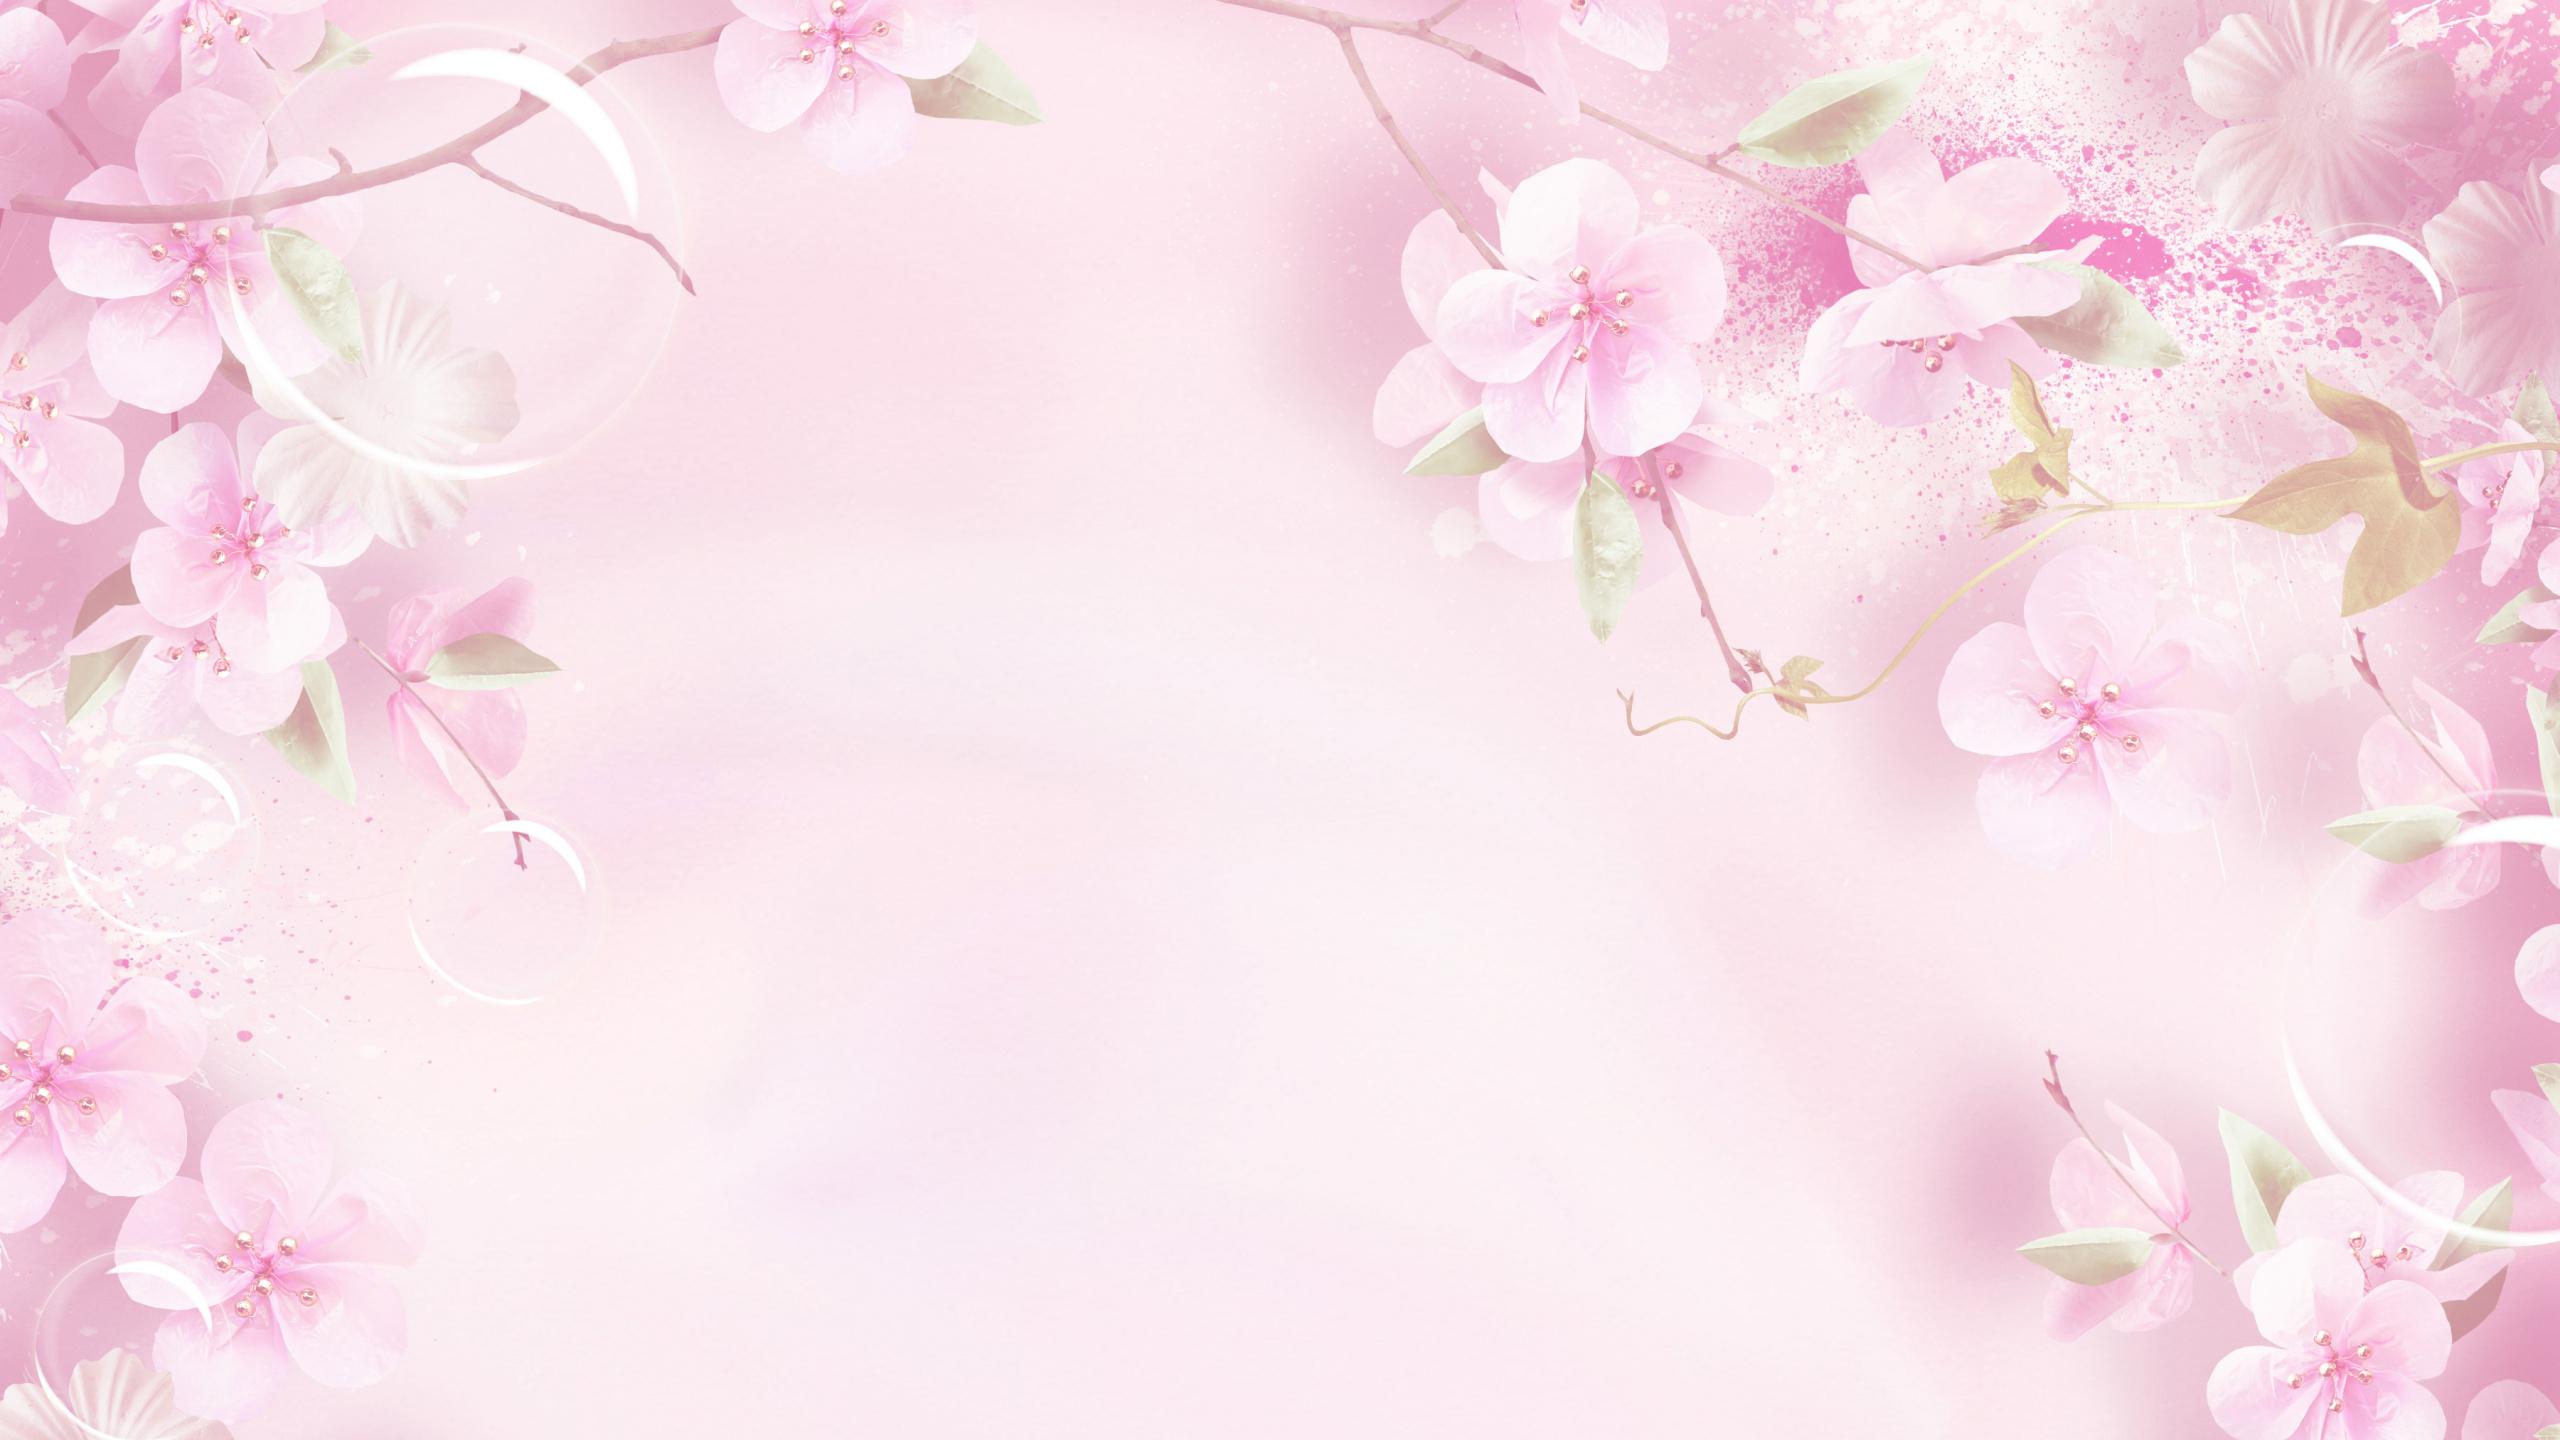 Petal, Floral Design, Blossom, Spring, Flower WQHD, QHD, 16:9